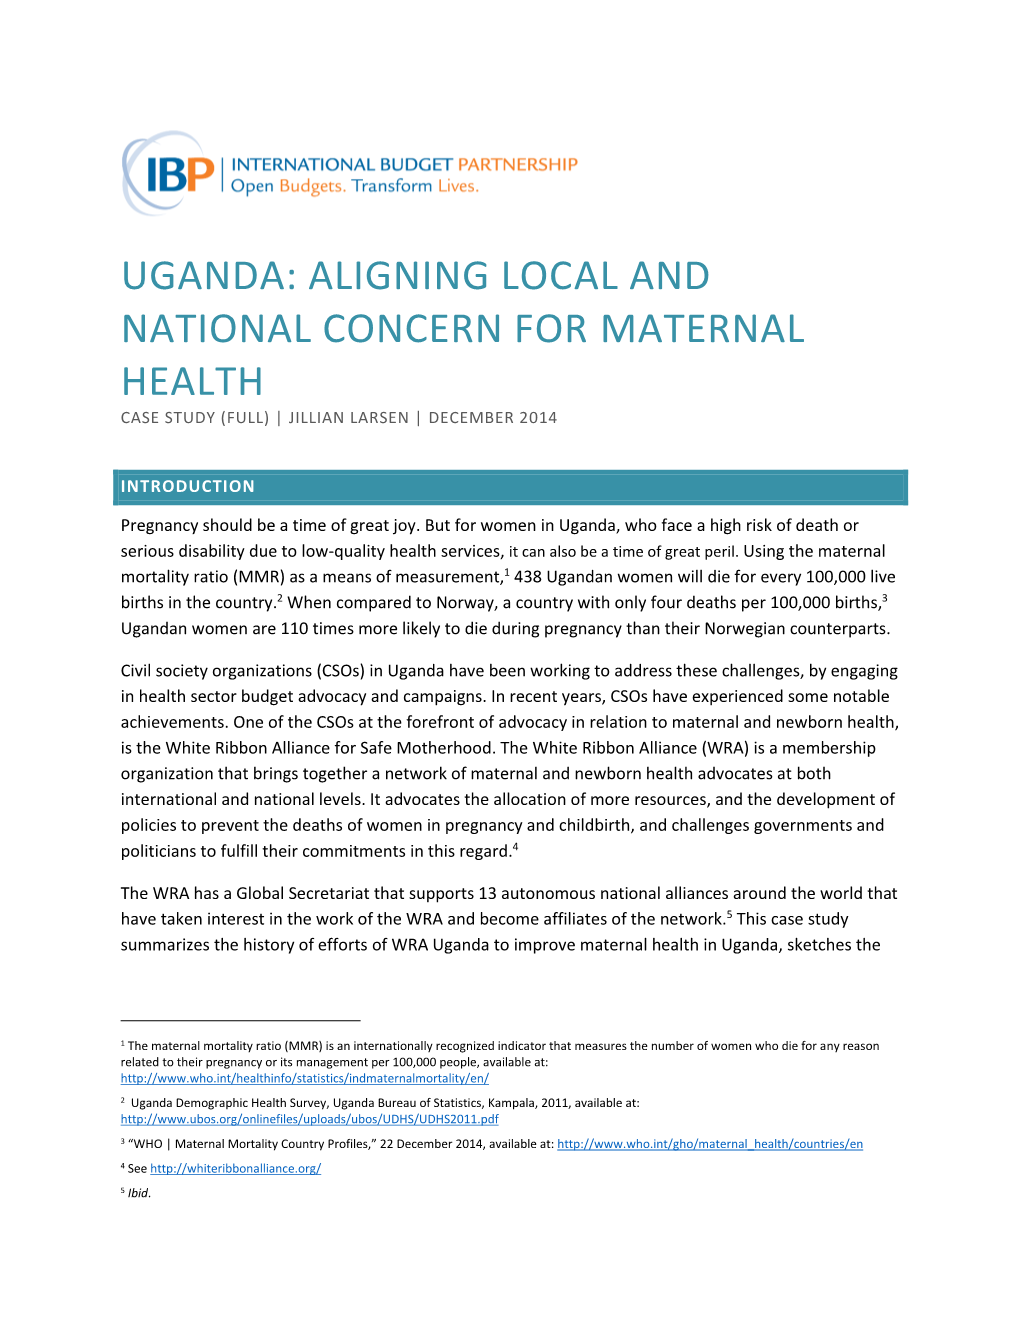 Uganda: Aligning Local and National Concern for Maternal Health Case Study (Full) | Jillian Larsen | December 2014